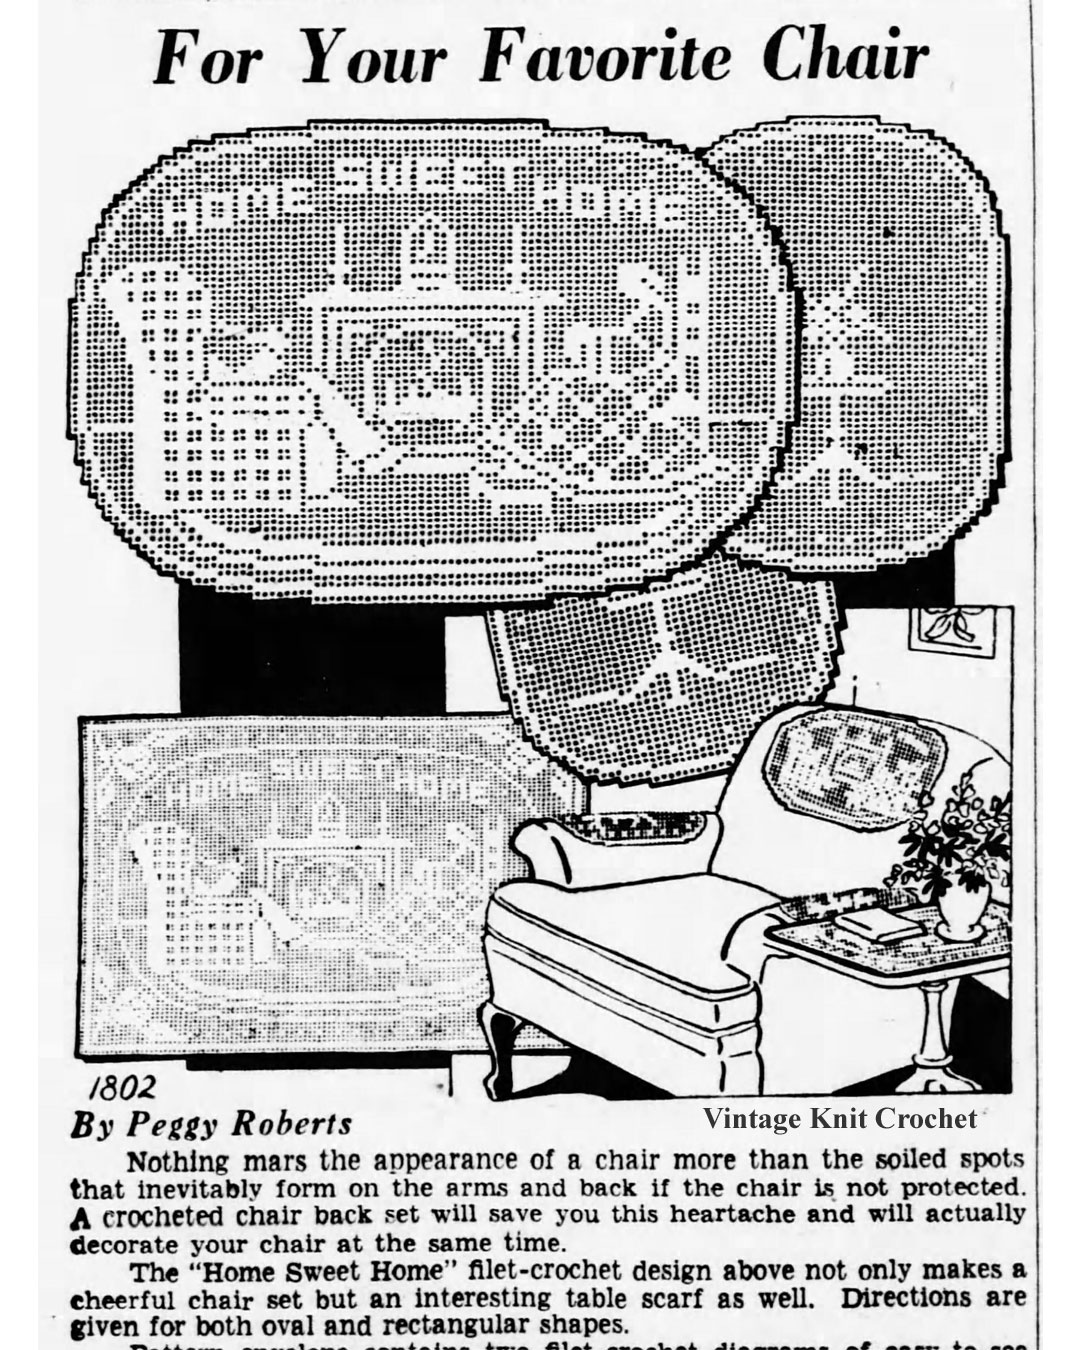 Filet Crochet Home Sweet Home Pattern No 1802 Newspaper Advertisement 